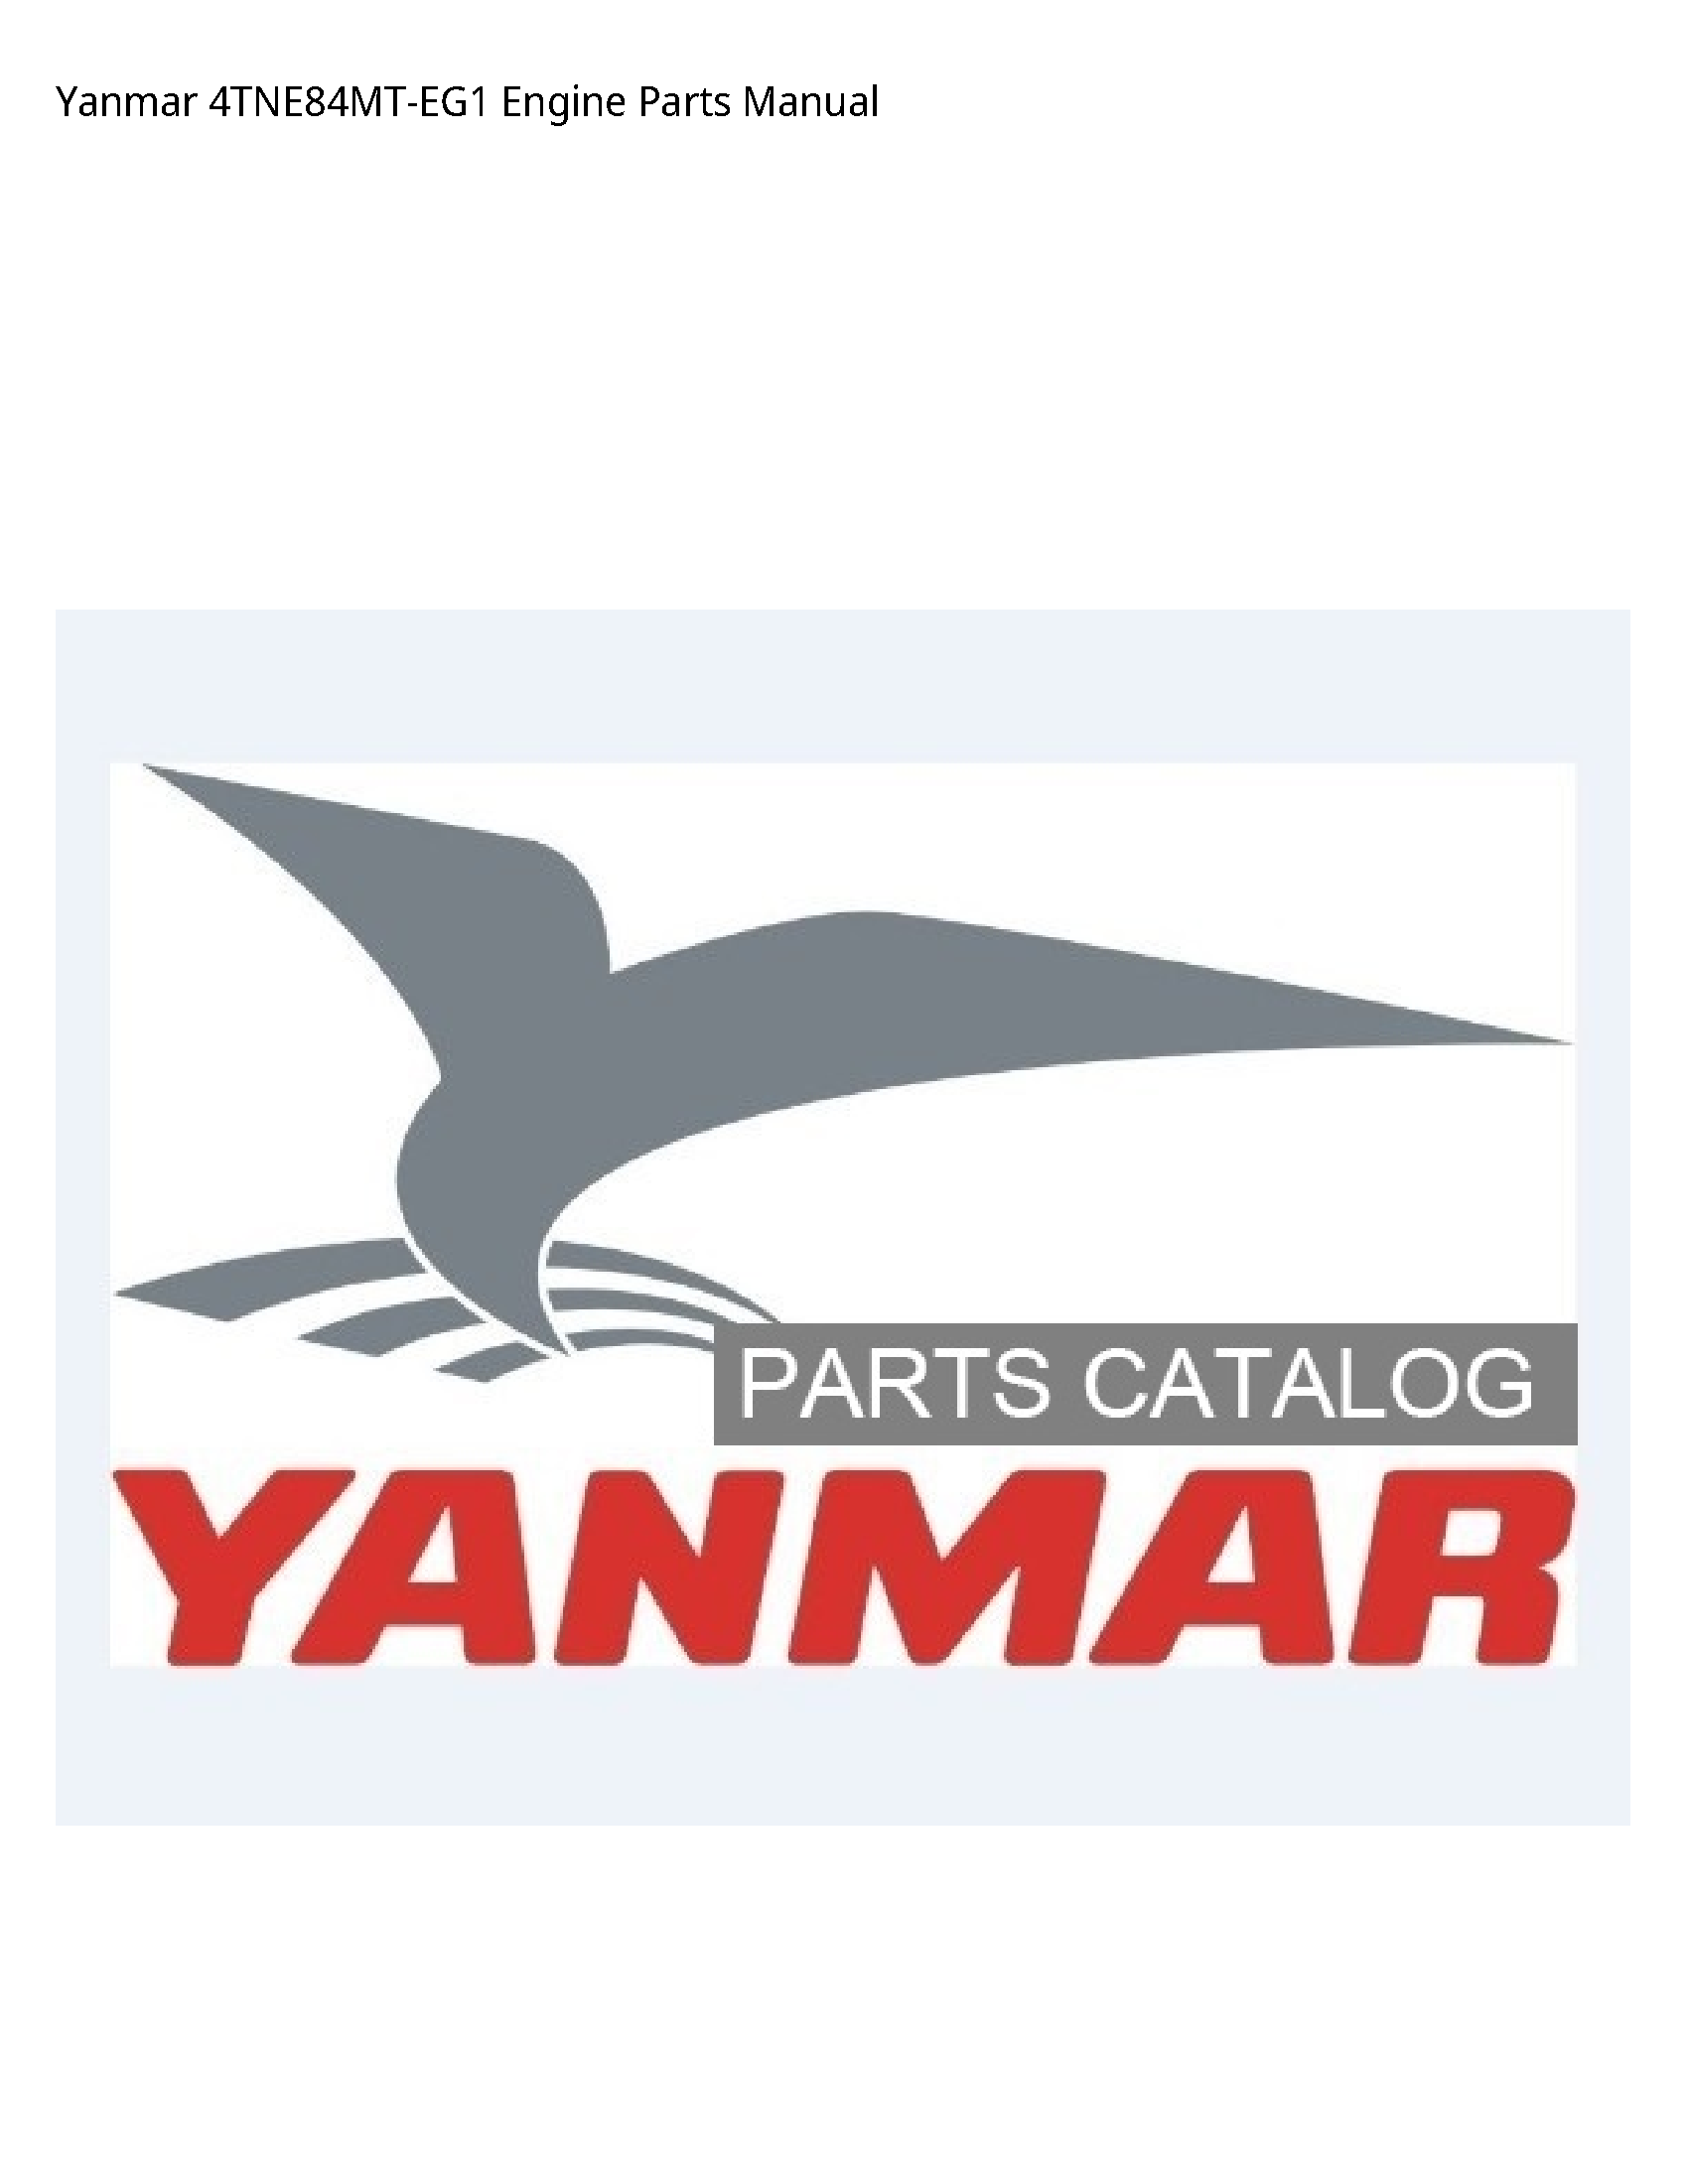 Yanmar 4TNE84MT-EG1 Engine Parts manual